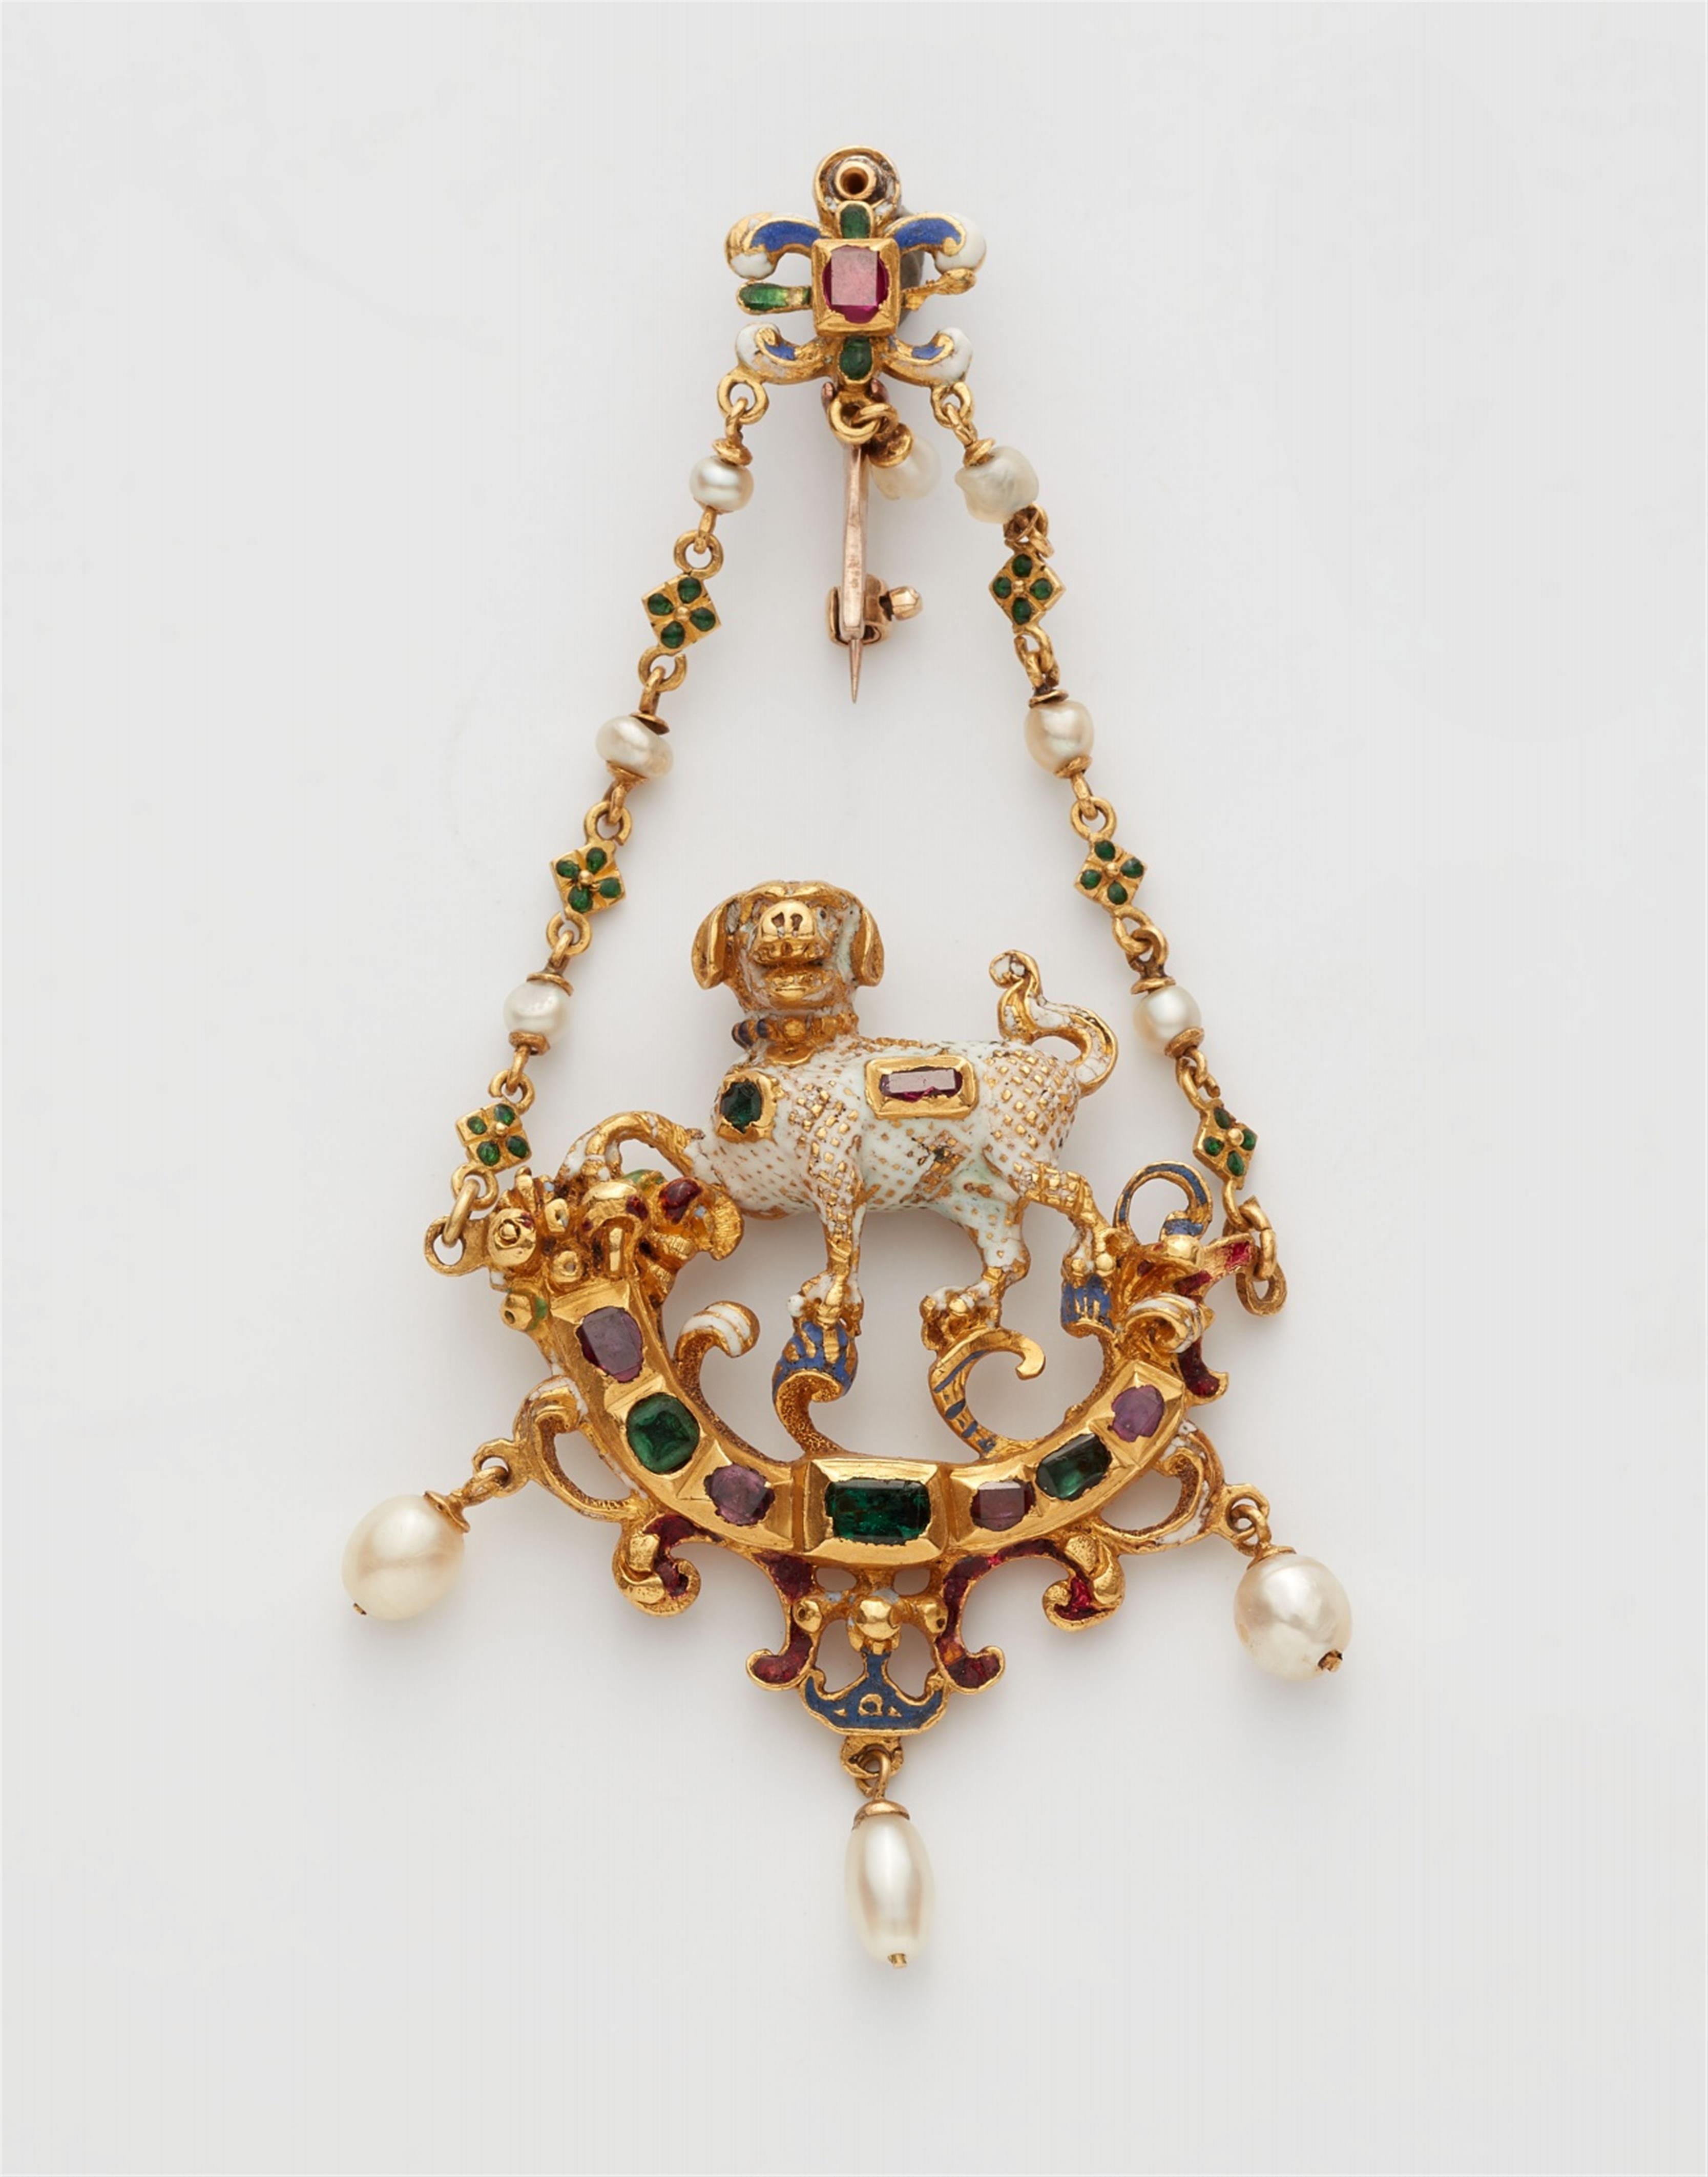 A Renaissance Revival gold enamel and gemstone pendant - image-1